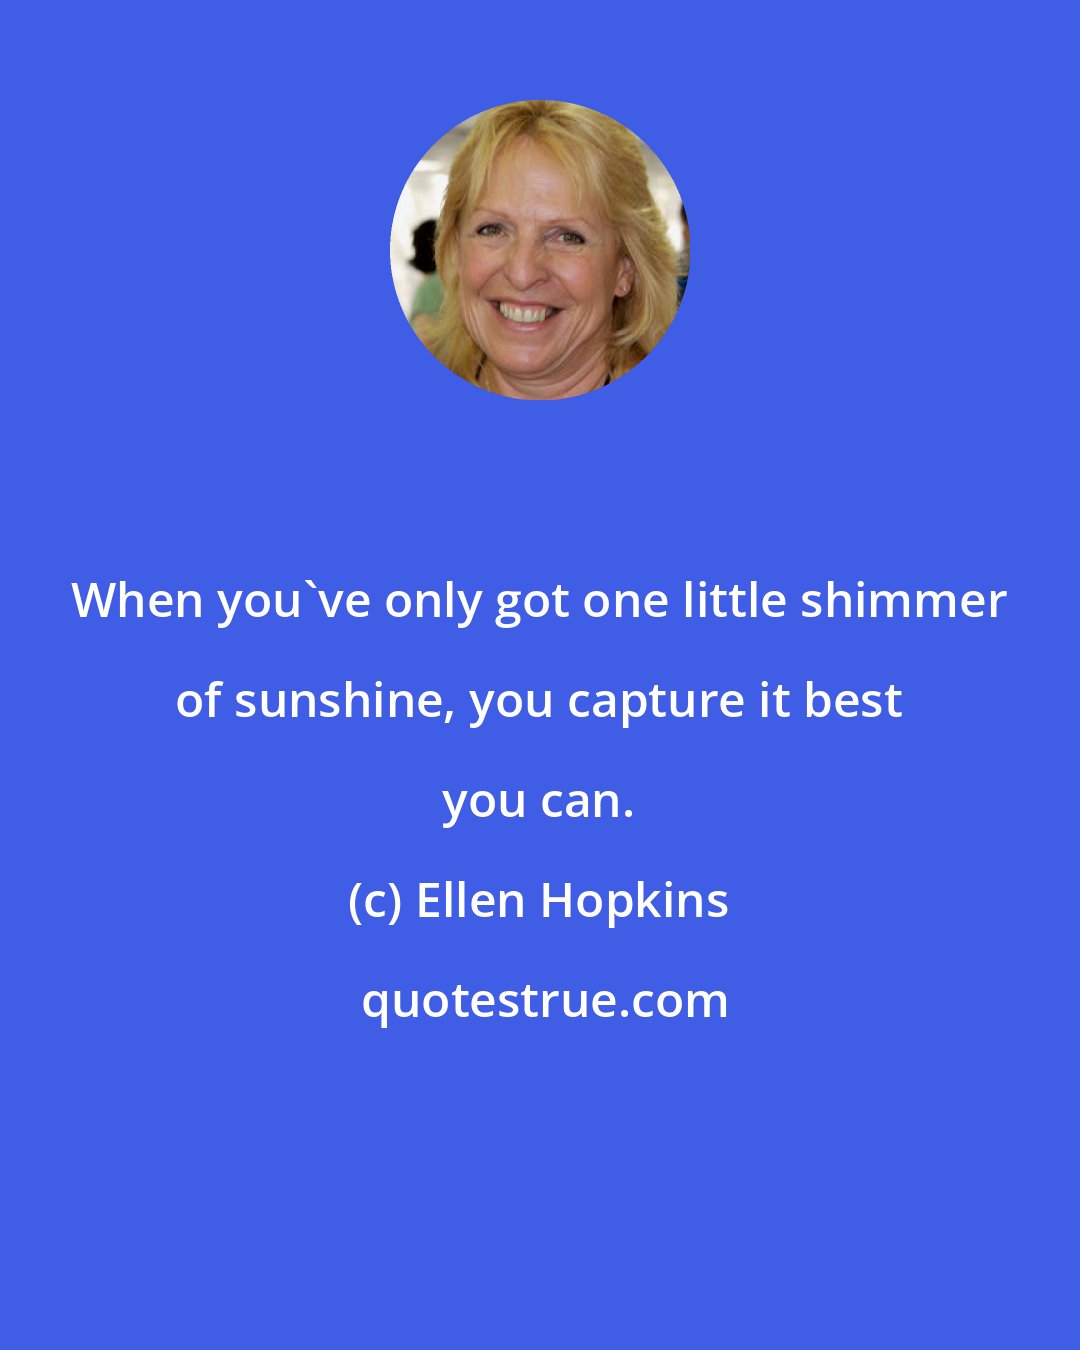 Ellen Hopkins: When you've only got one little shimmer of sunshine, you capture it best you can.